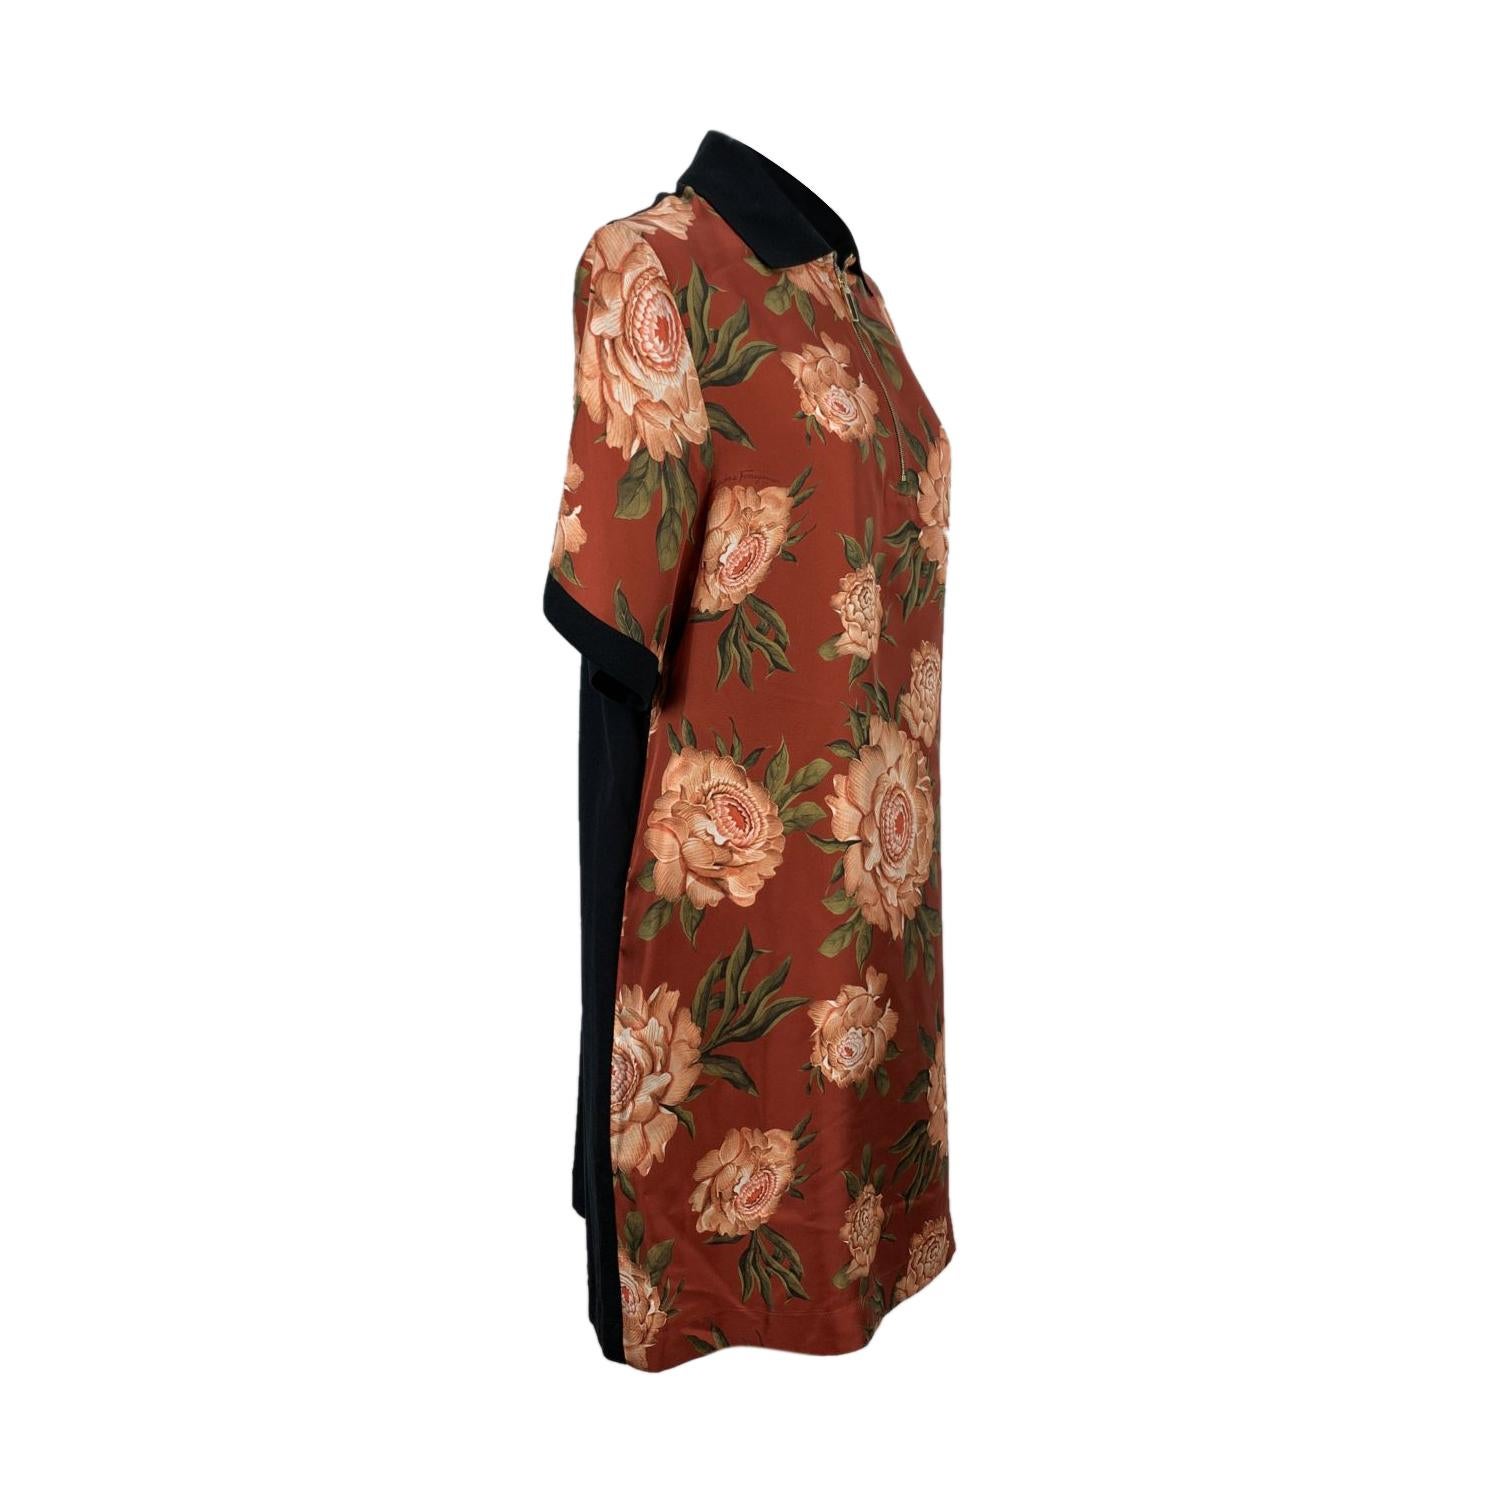 Brown Salvatore Ferragamo Floral Silk and Cotton T-Shirt Dress Size 36 IT